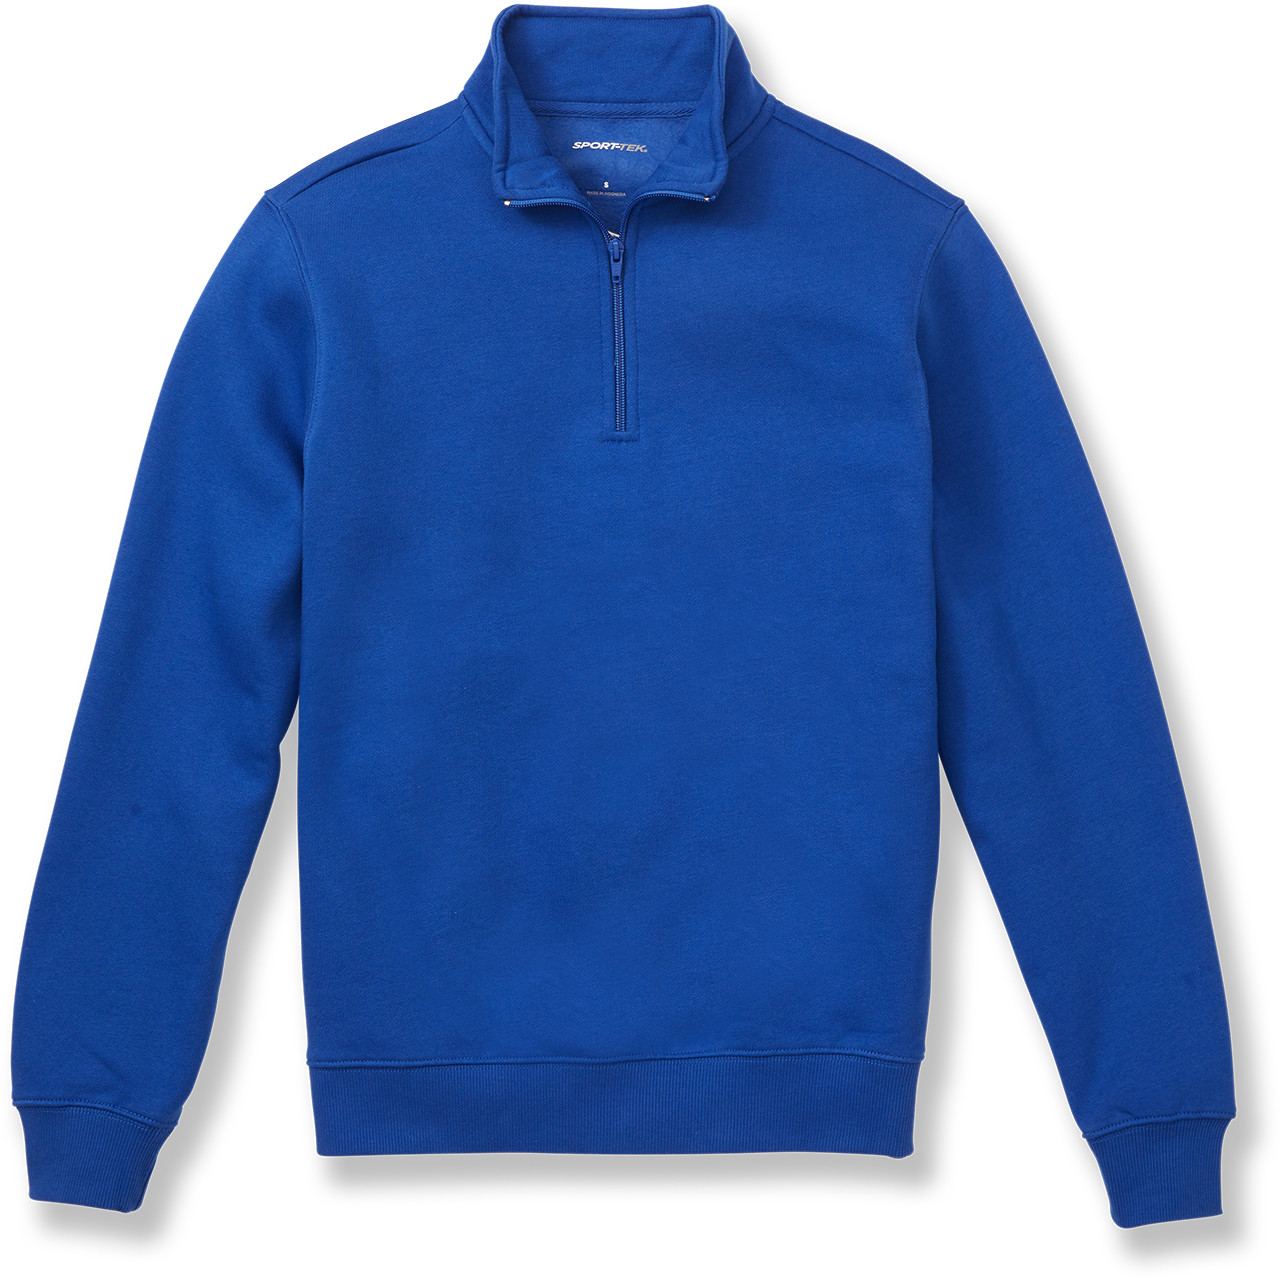 1/4 Zip Sweatshirt with heat transferred logo [NJ249-ST253PCT-ROYAL] -  FlynnO'Hara Uniforms